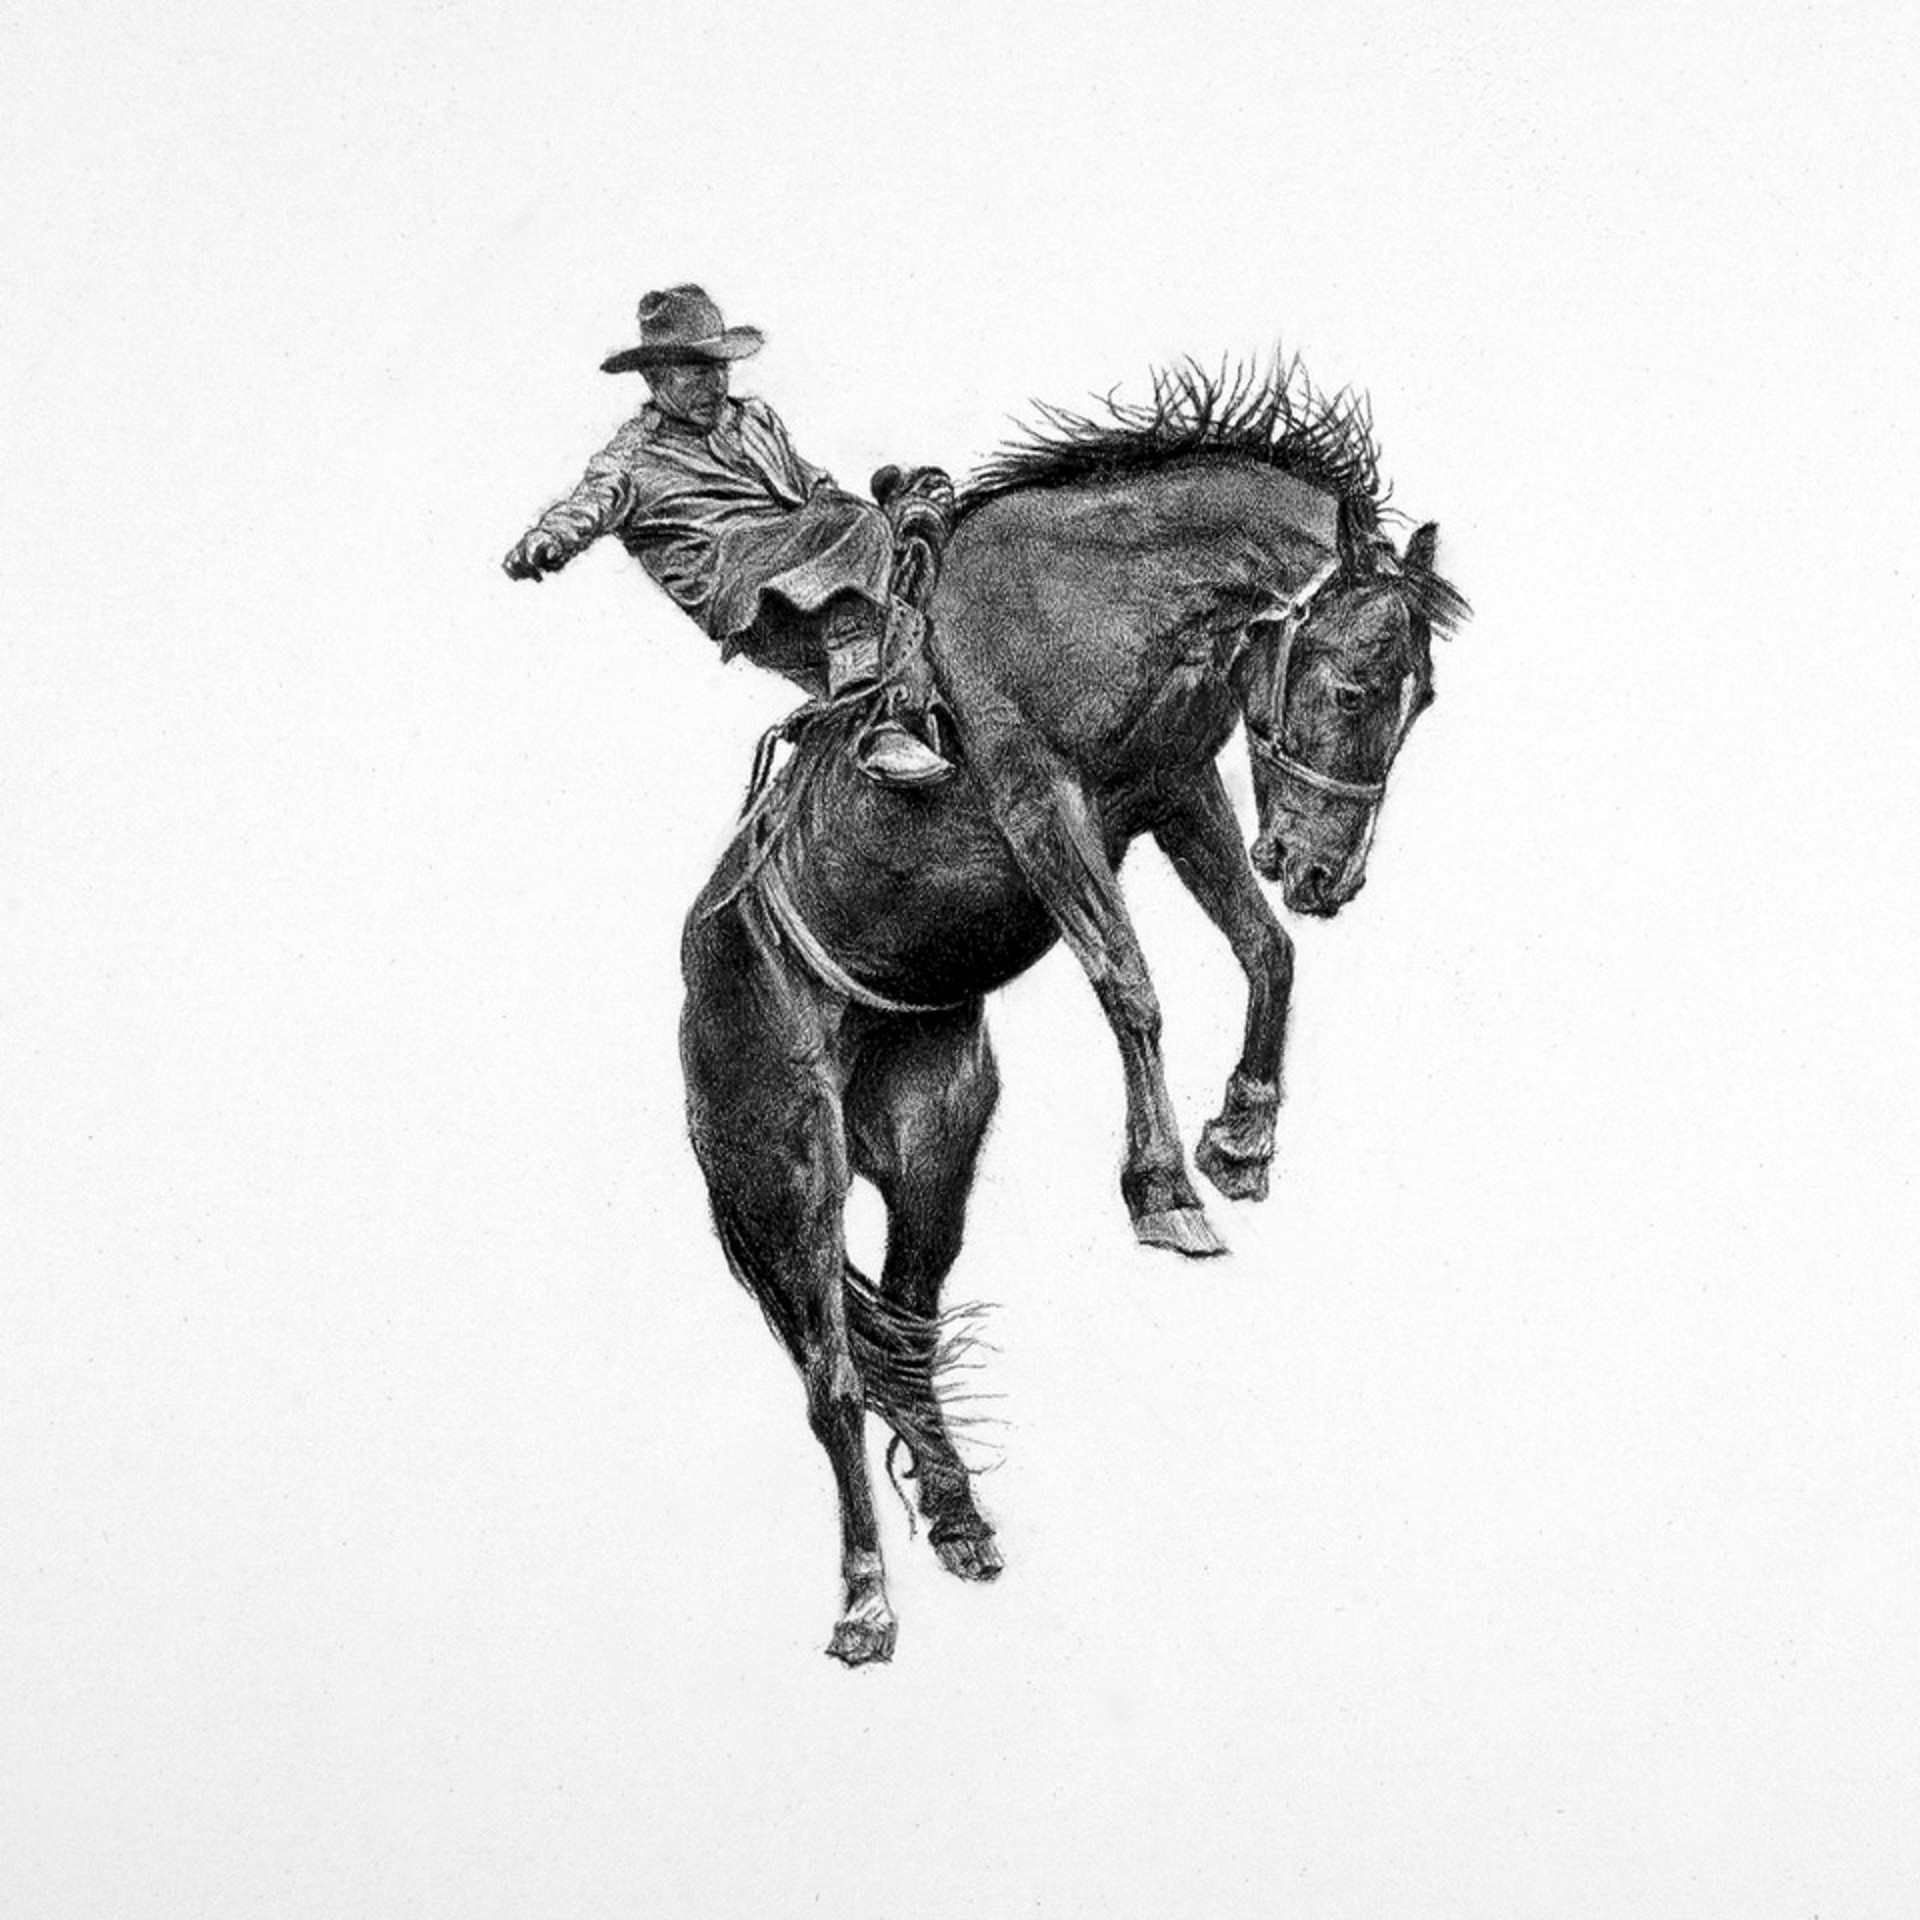 Untitled (bronc rider) #5529 by Clayton Porter